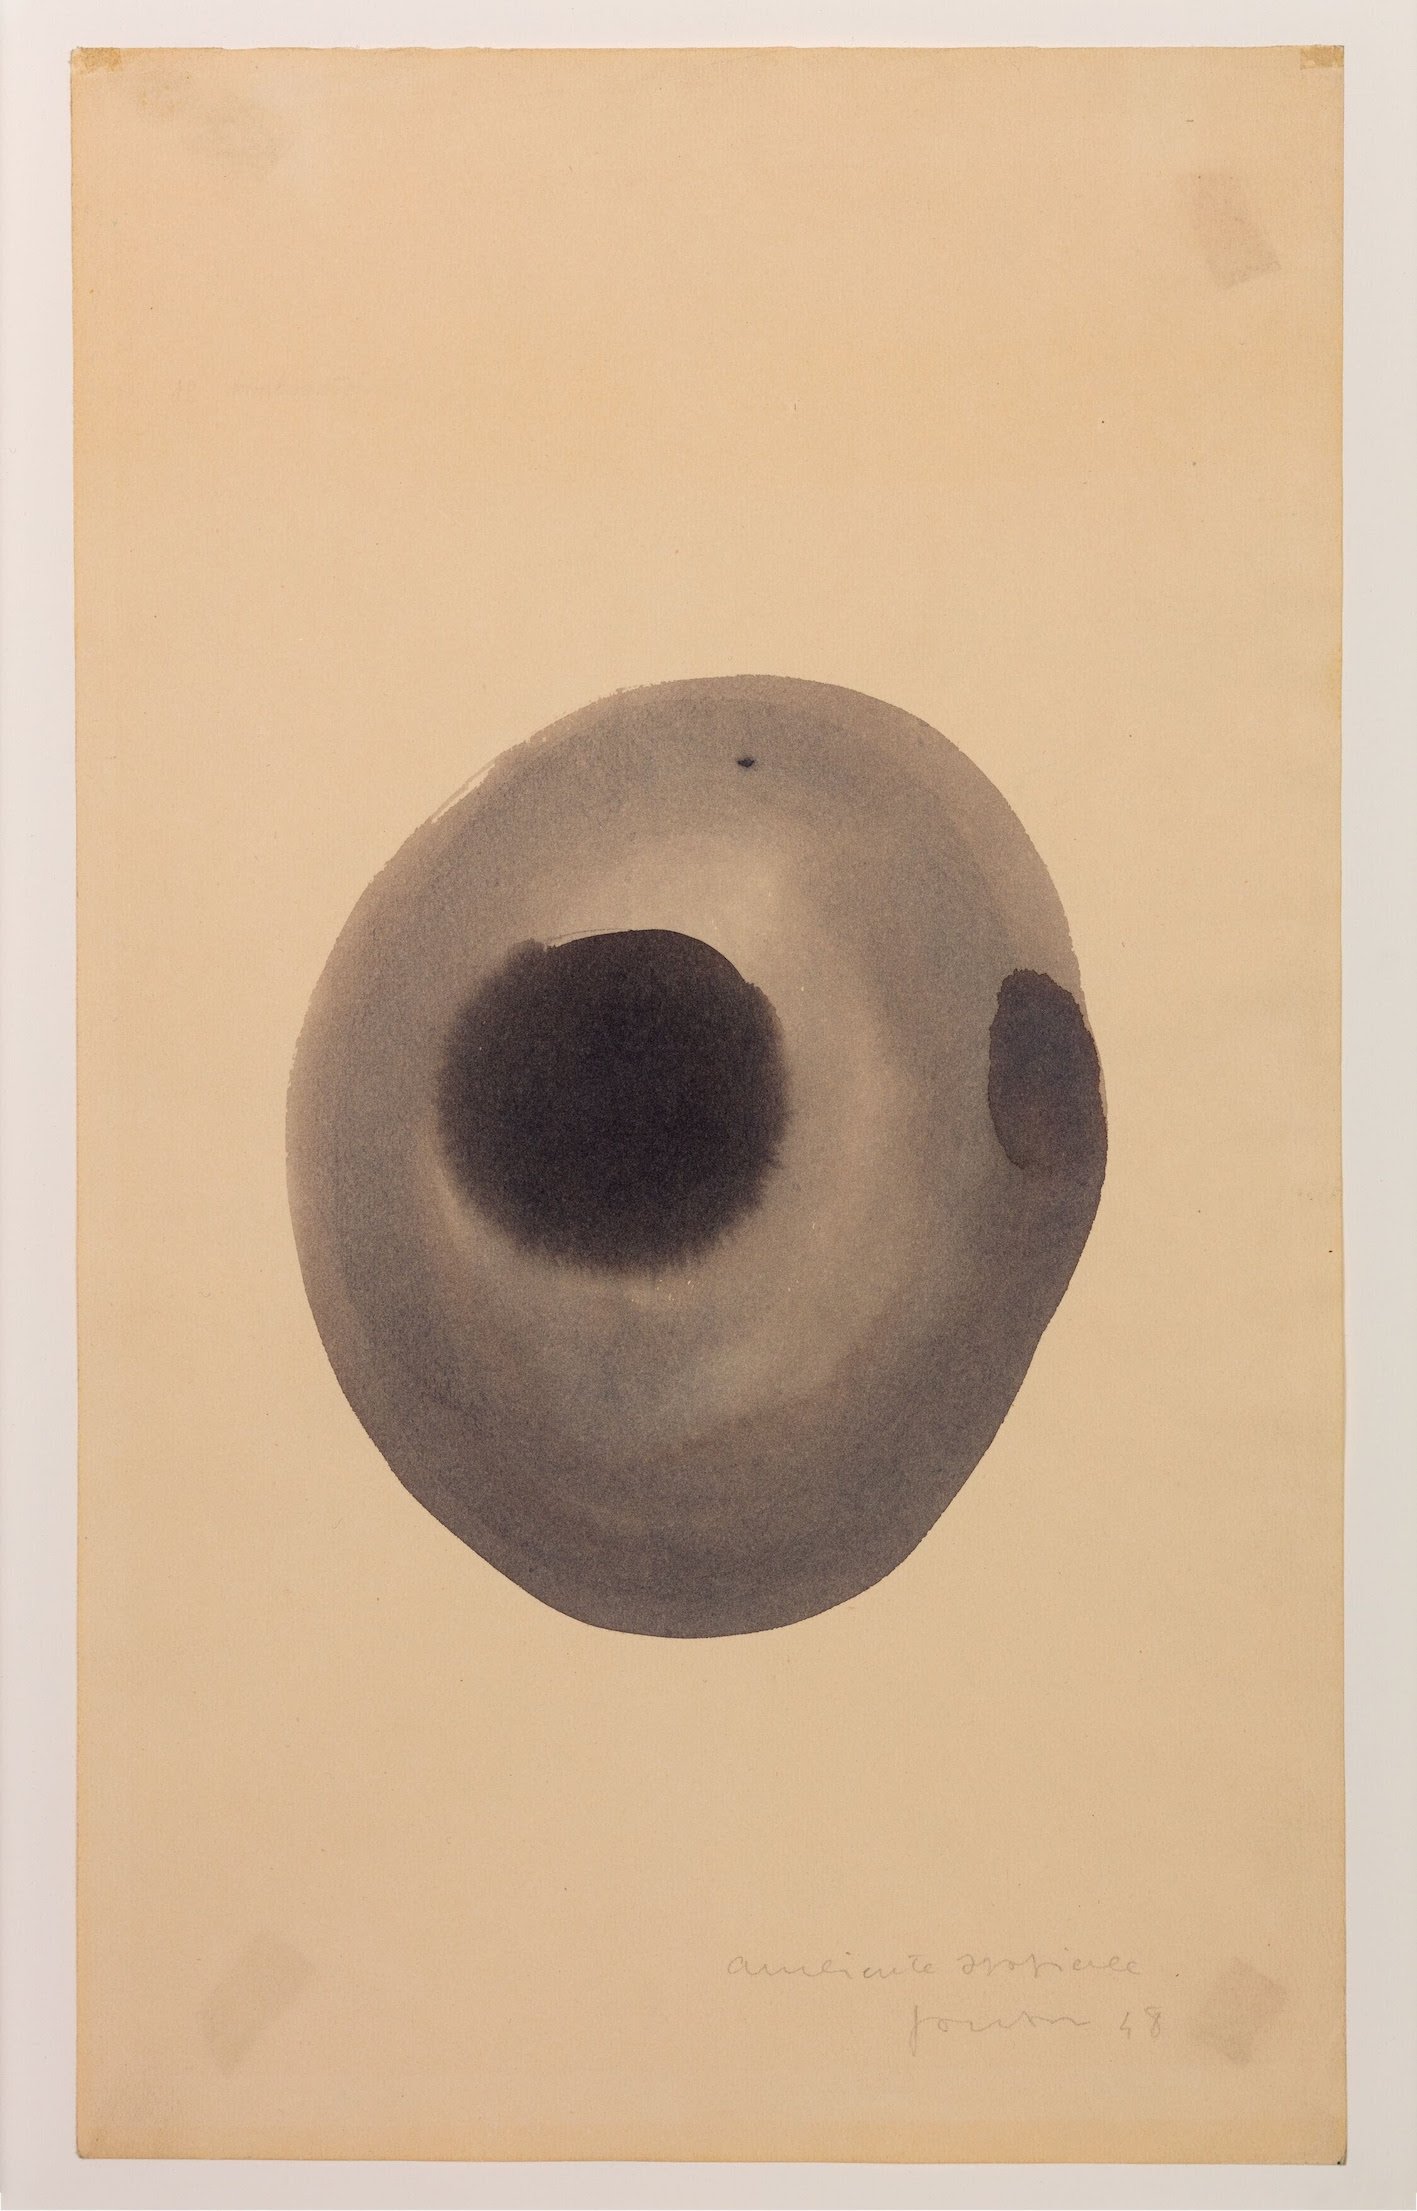 Lucio Fontana, Ambiente spaziale, 1948, gouache su carta, 37,7 x 22,5 cm